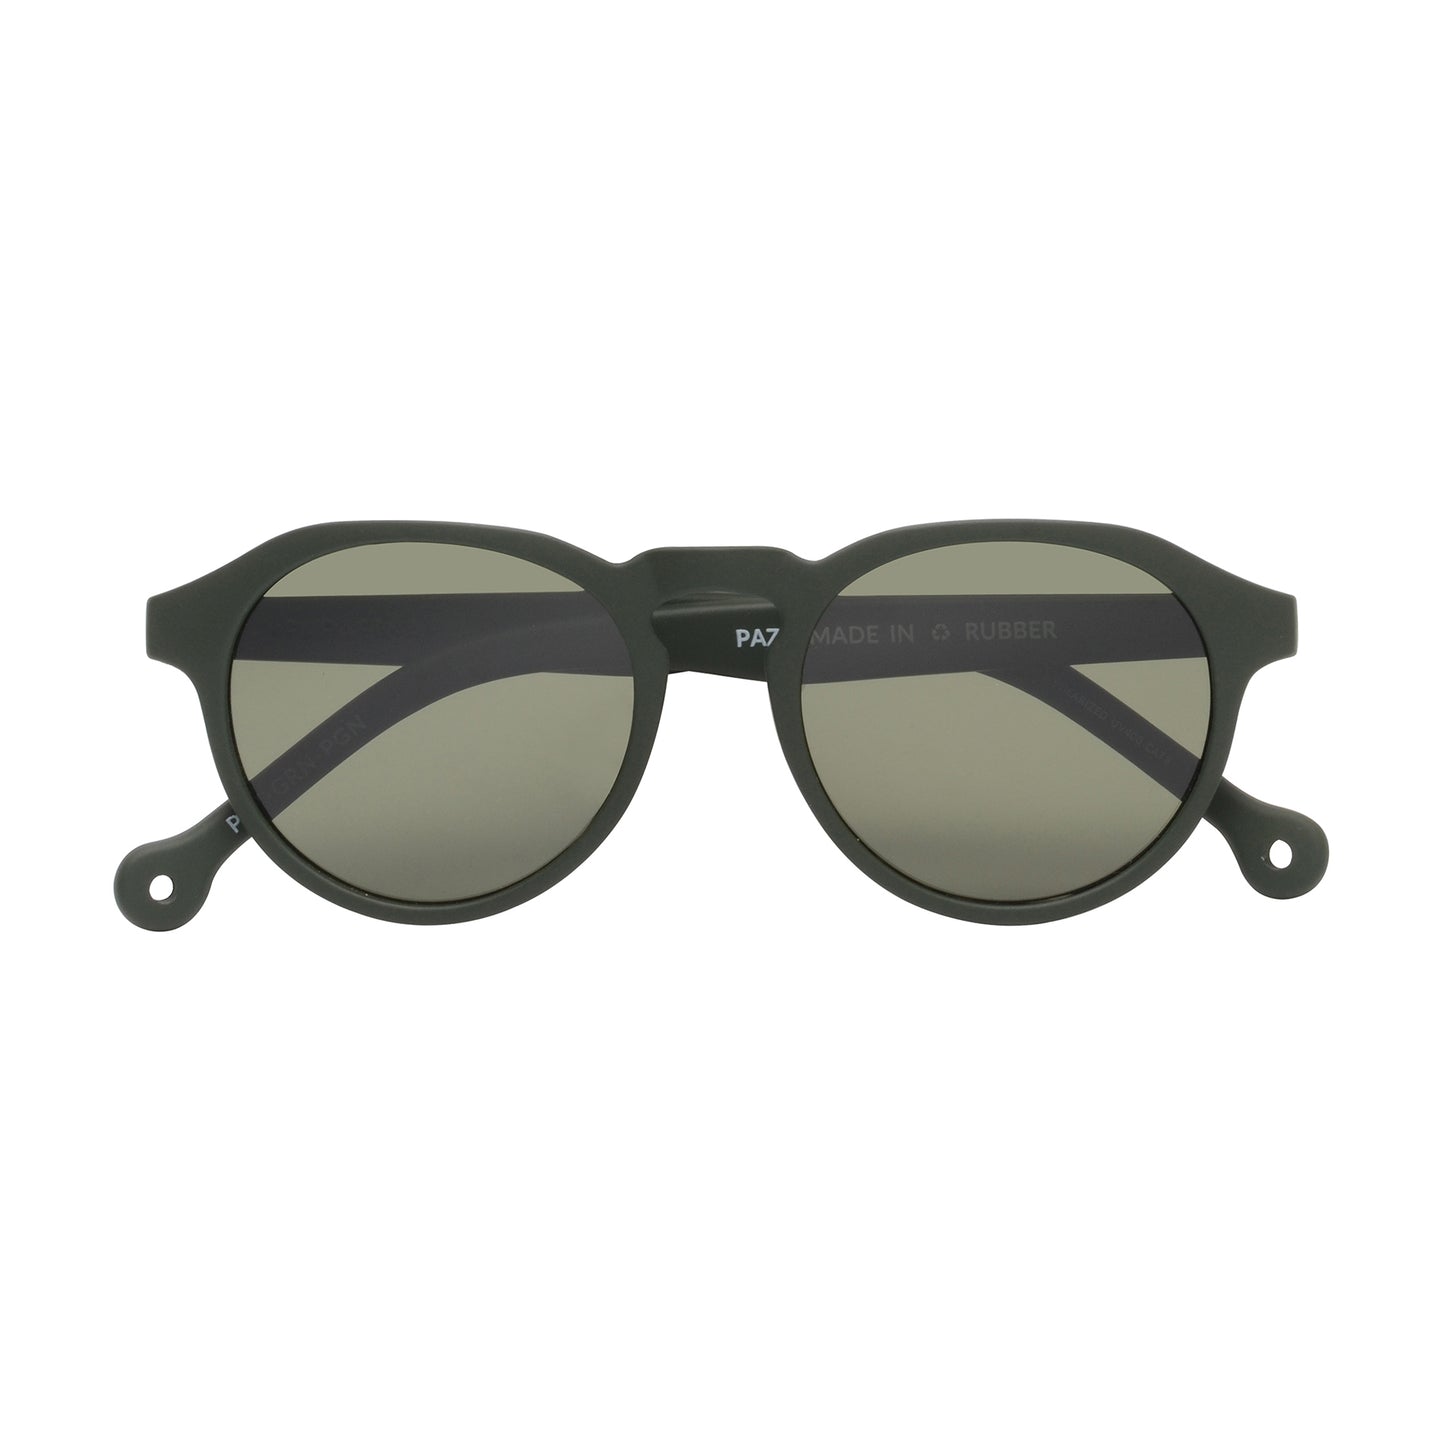 PAZO Sunglasses - Dark Green